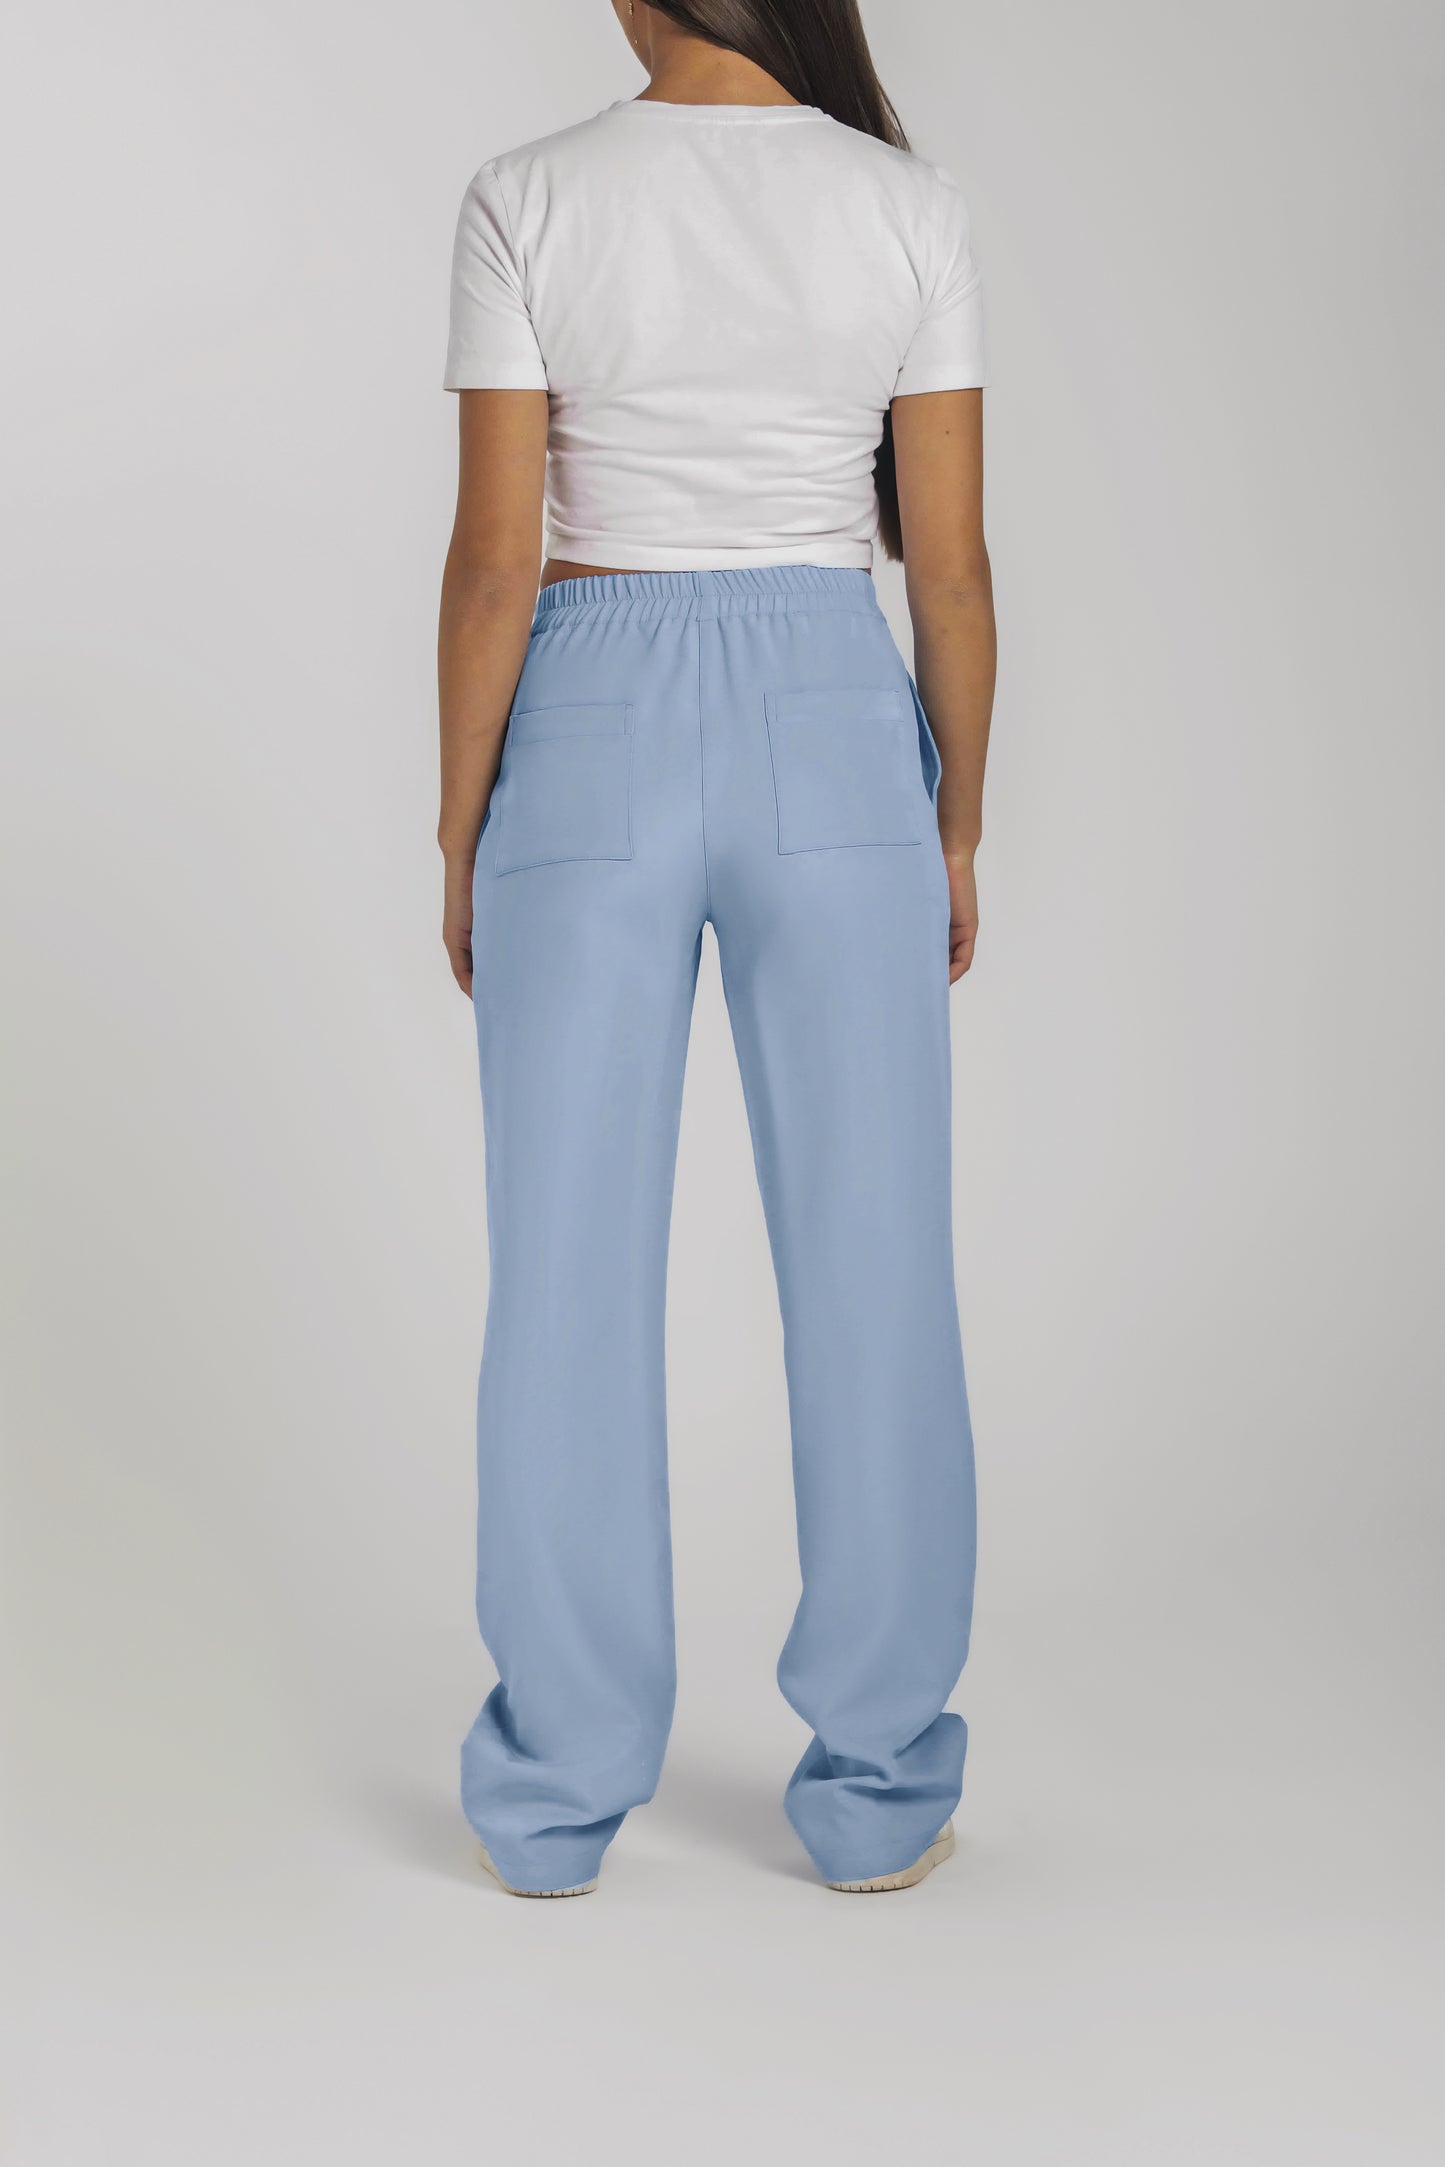 Asymmetrical Pants In Baby Blue